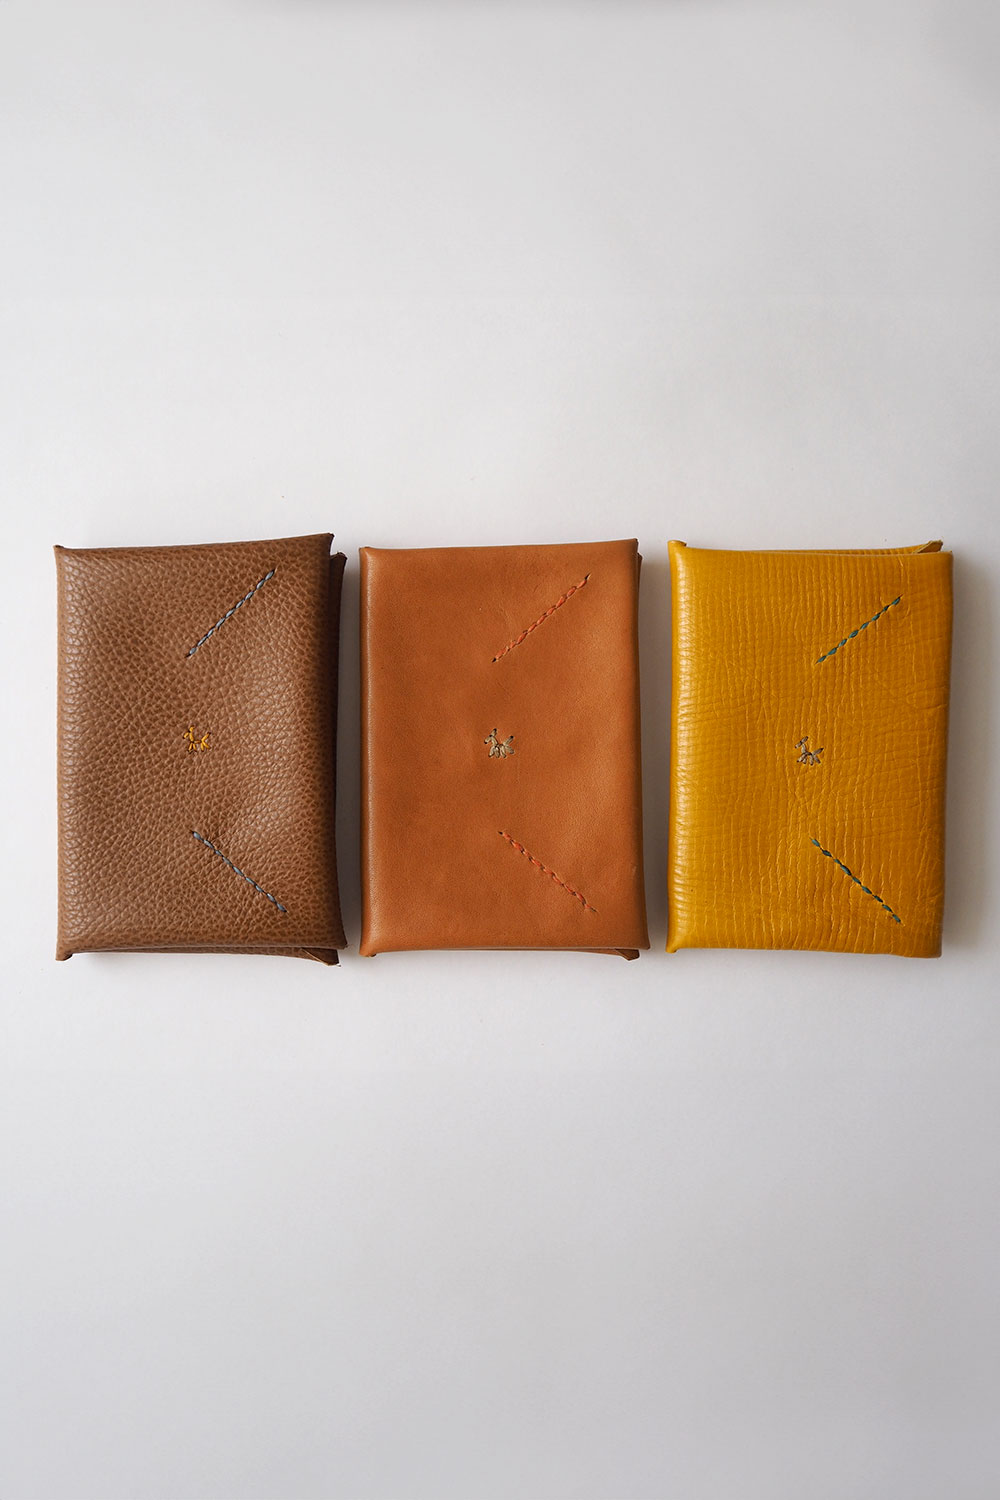 Henri、アンリ、leather goods、handcrafted leather、ハンドクラフト、made in Itary、ハンドメイド、手作り、handmade、カードケース、card case